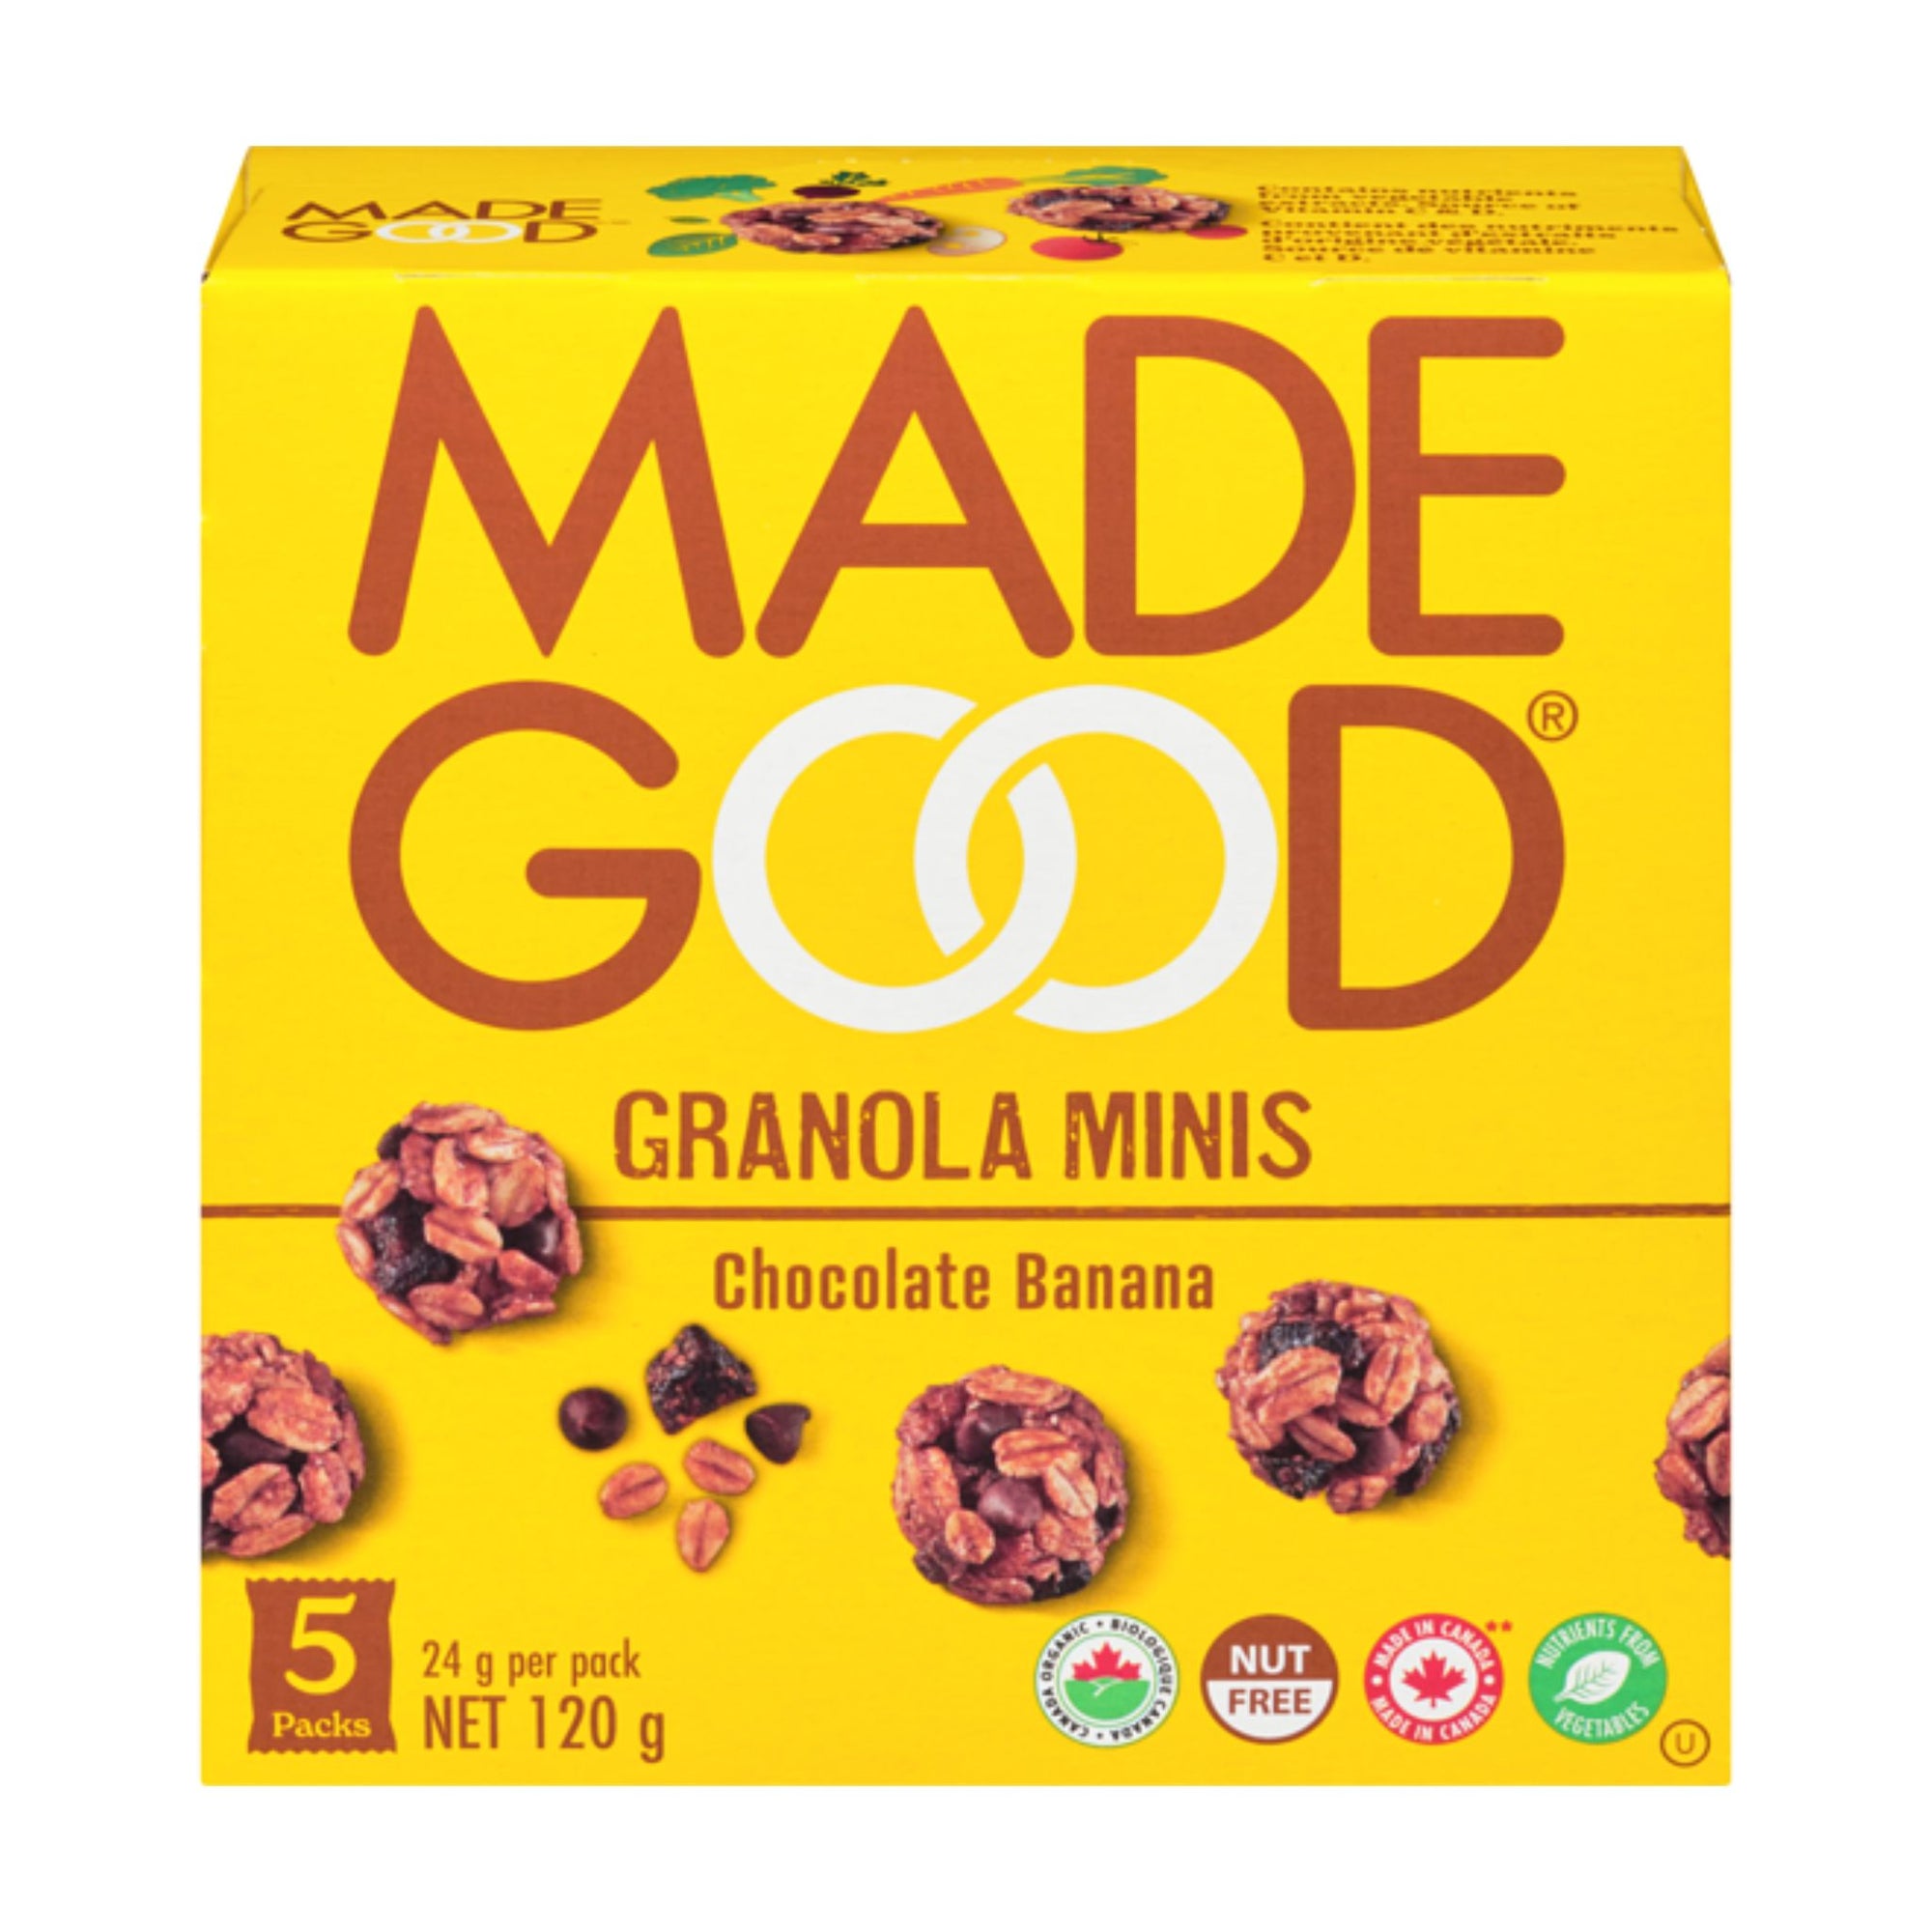 Made Good Chocolate Banana Granola Minis - 5 packs, 24g per pack. Nut free, gluten free, allergy friendly, Non-GMO, organic